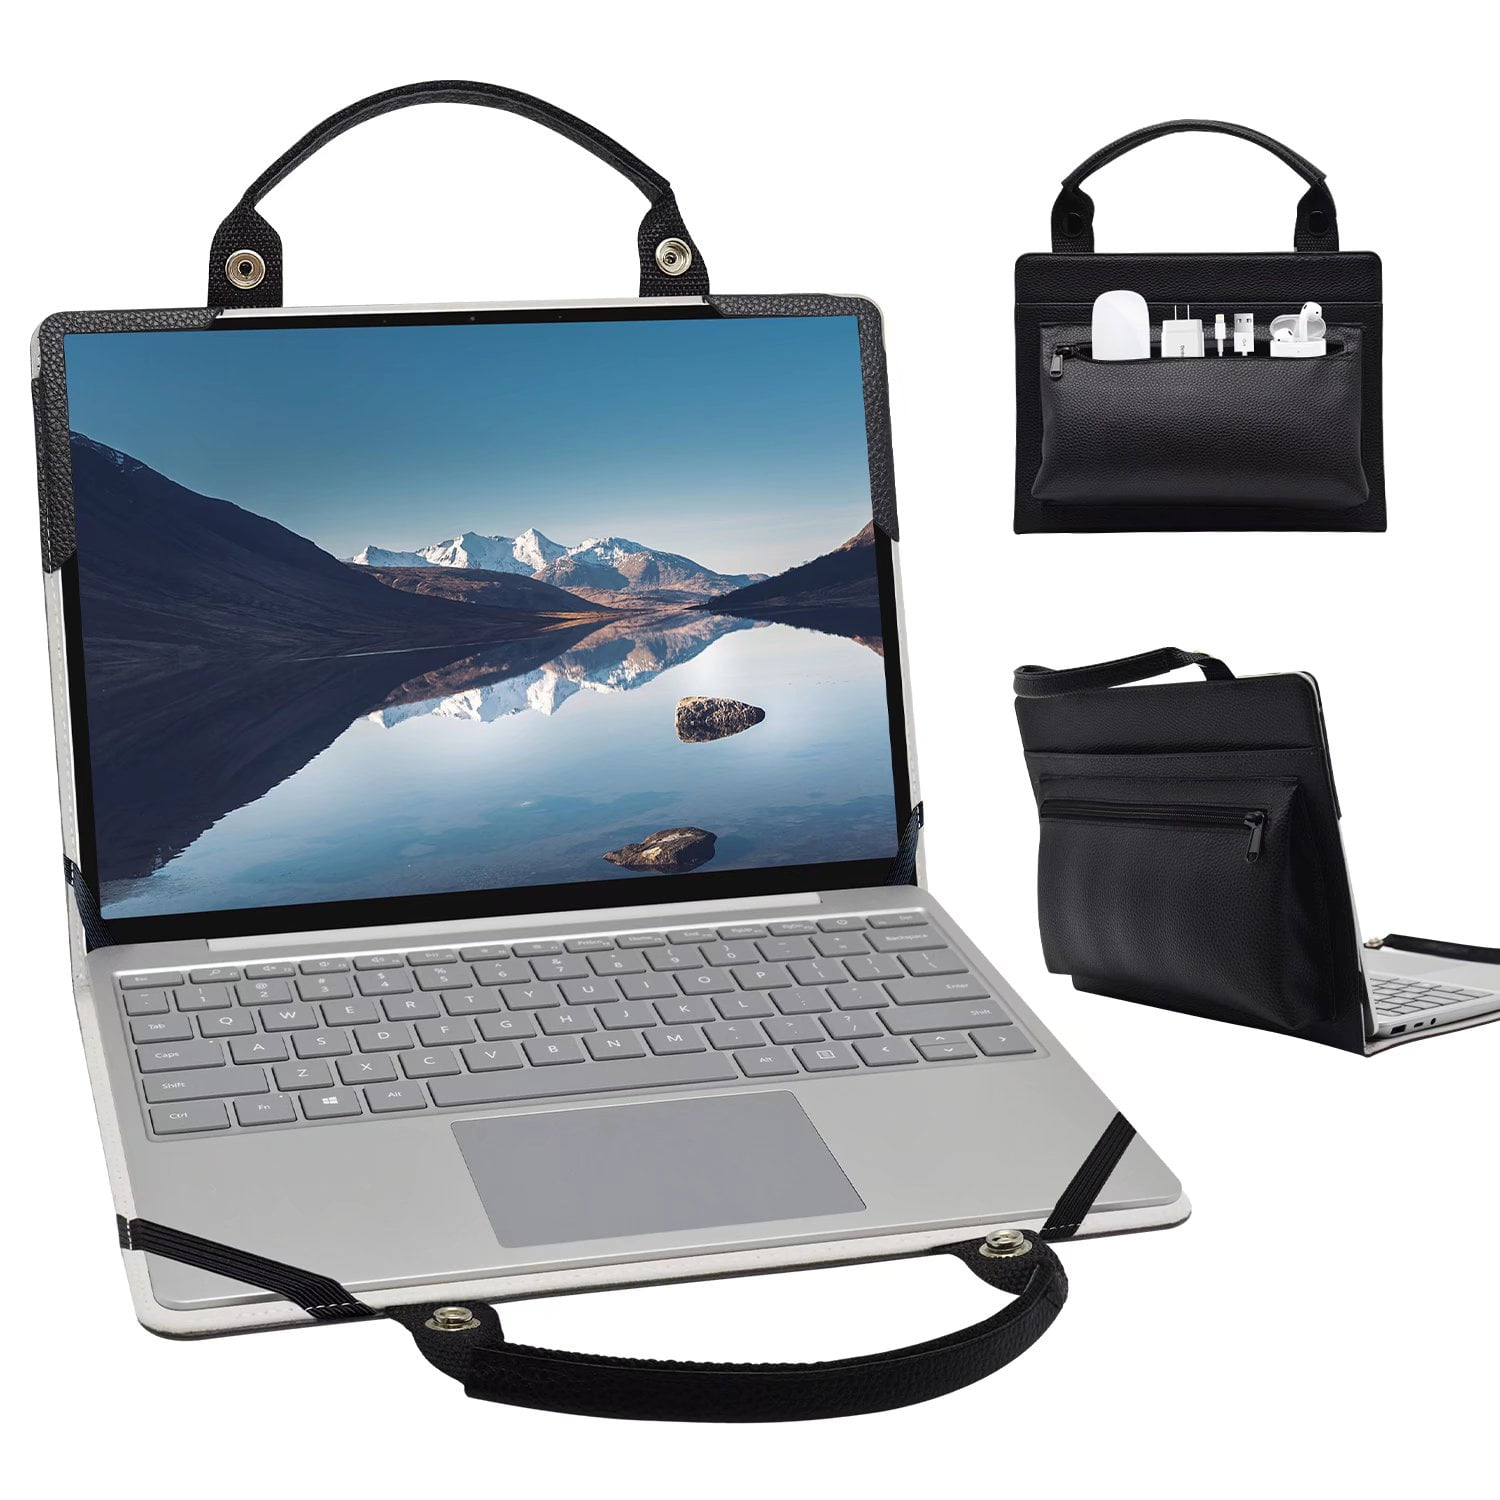 Lenovo Thinkpad X1 Carbon (6th Gen) Laptop Sleeve, Leather Laptop Case for Lenovo X1 (6th Gen) (7th Gen) with Accessories Bag Handle (Black) - Walmart.com